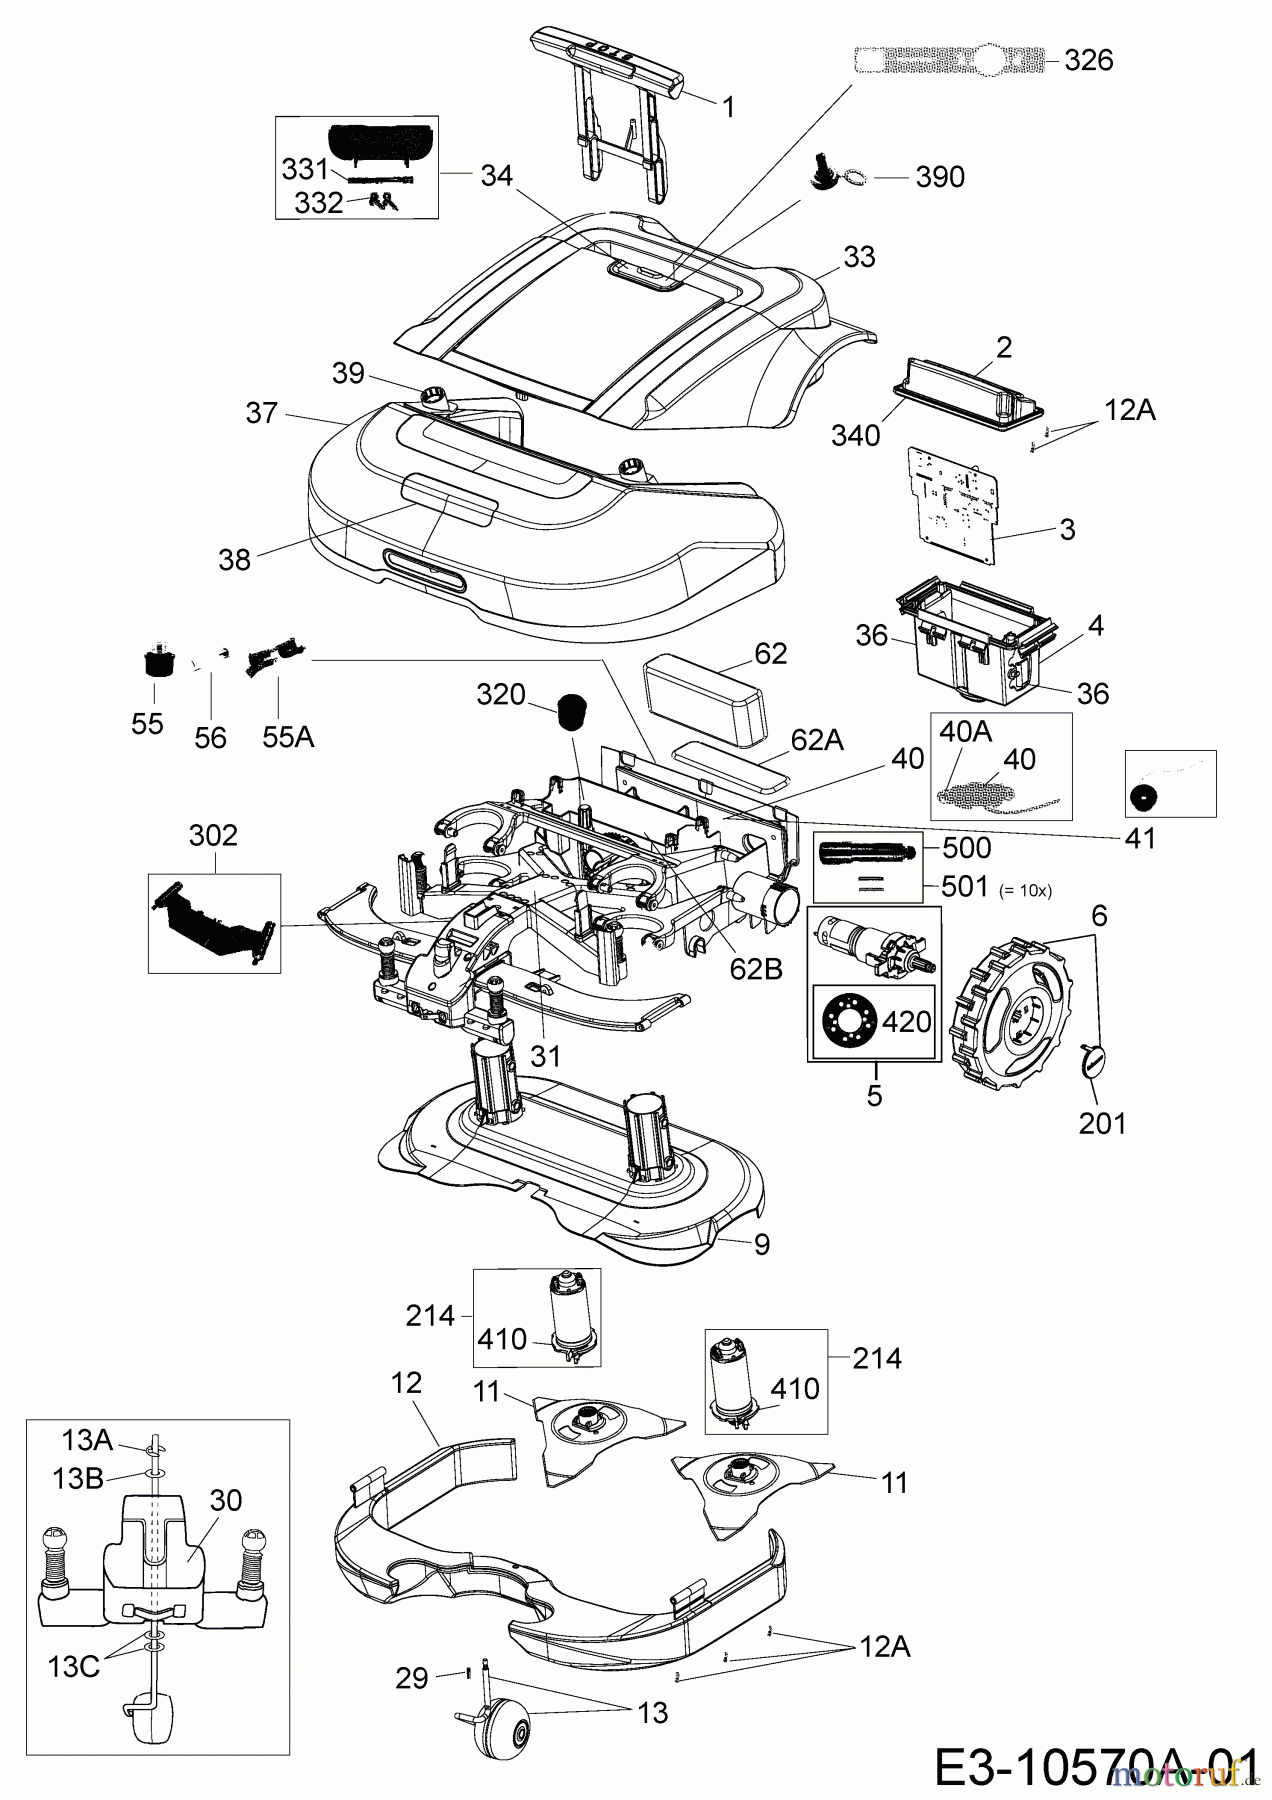  Robomow Robotic lawn mower MS 1800 (White) PRD6200YW2  (2015) Basic machine